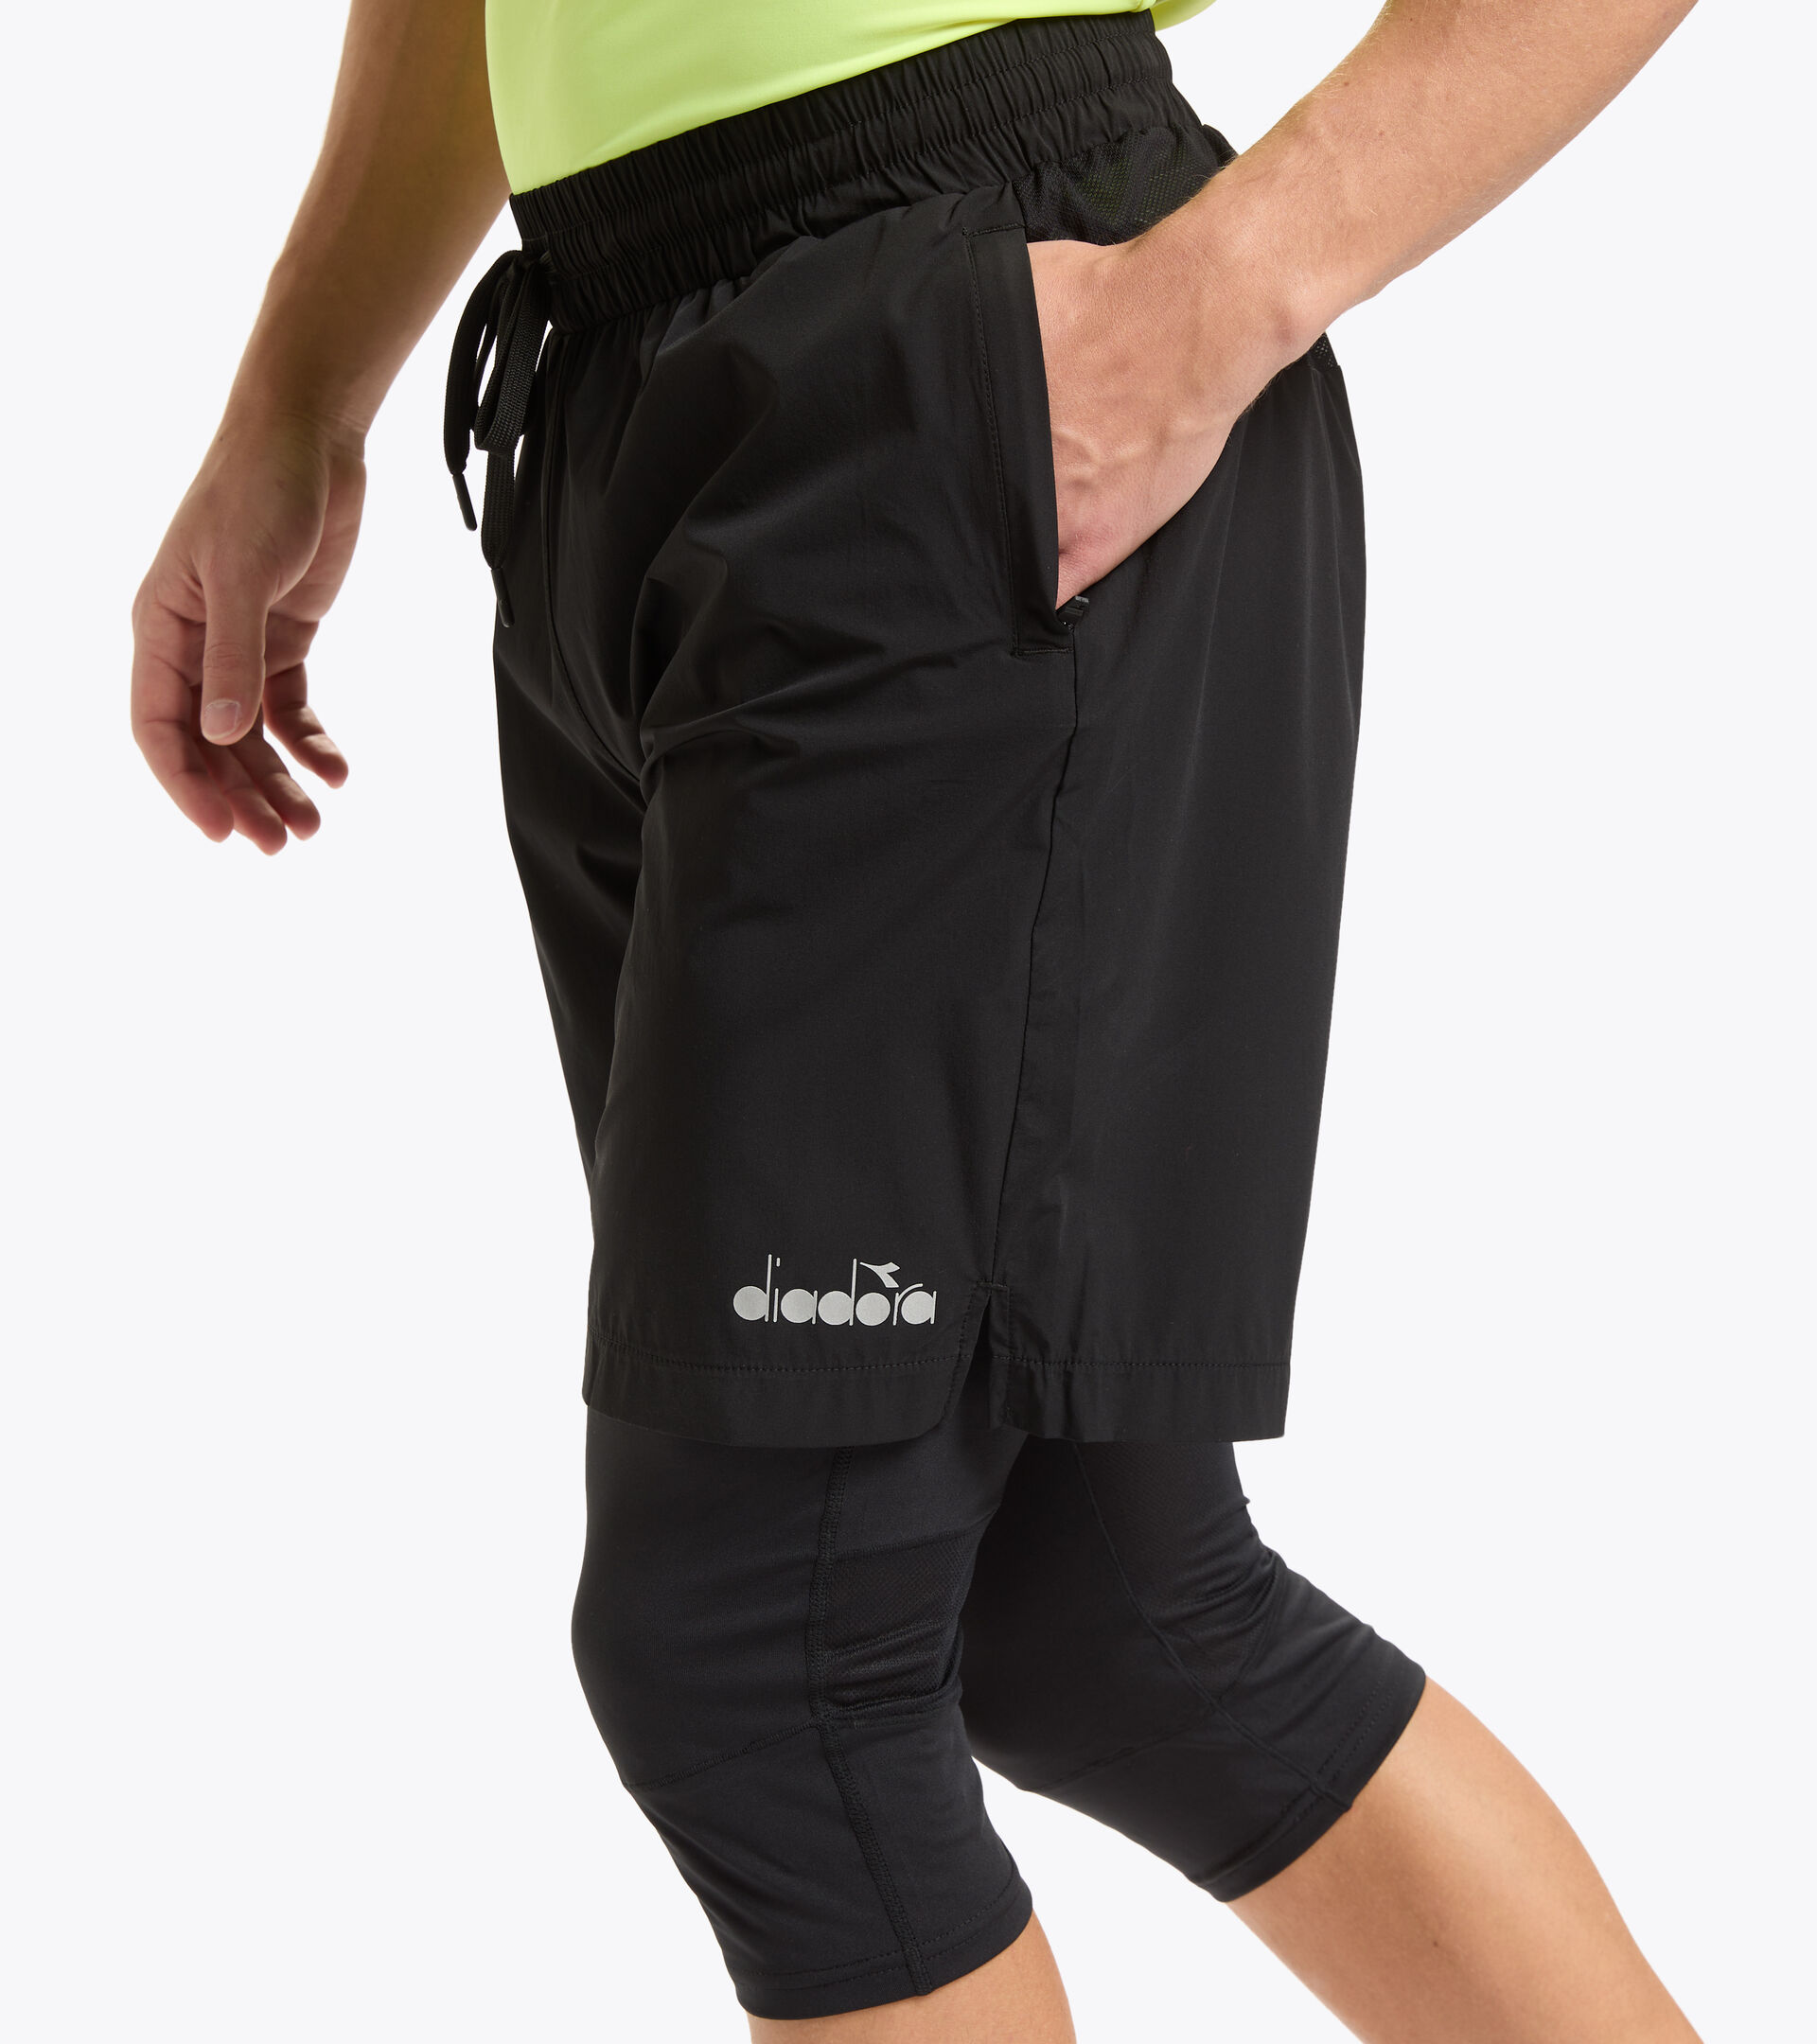 POWER SHORTS BE ONE - set Store Diadora shorts with - running Online Men Leggings detachable GR